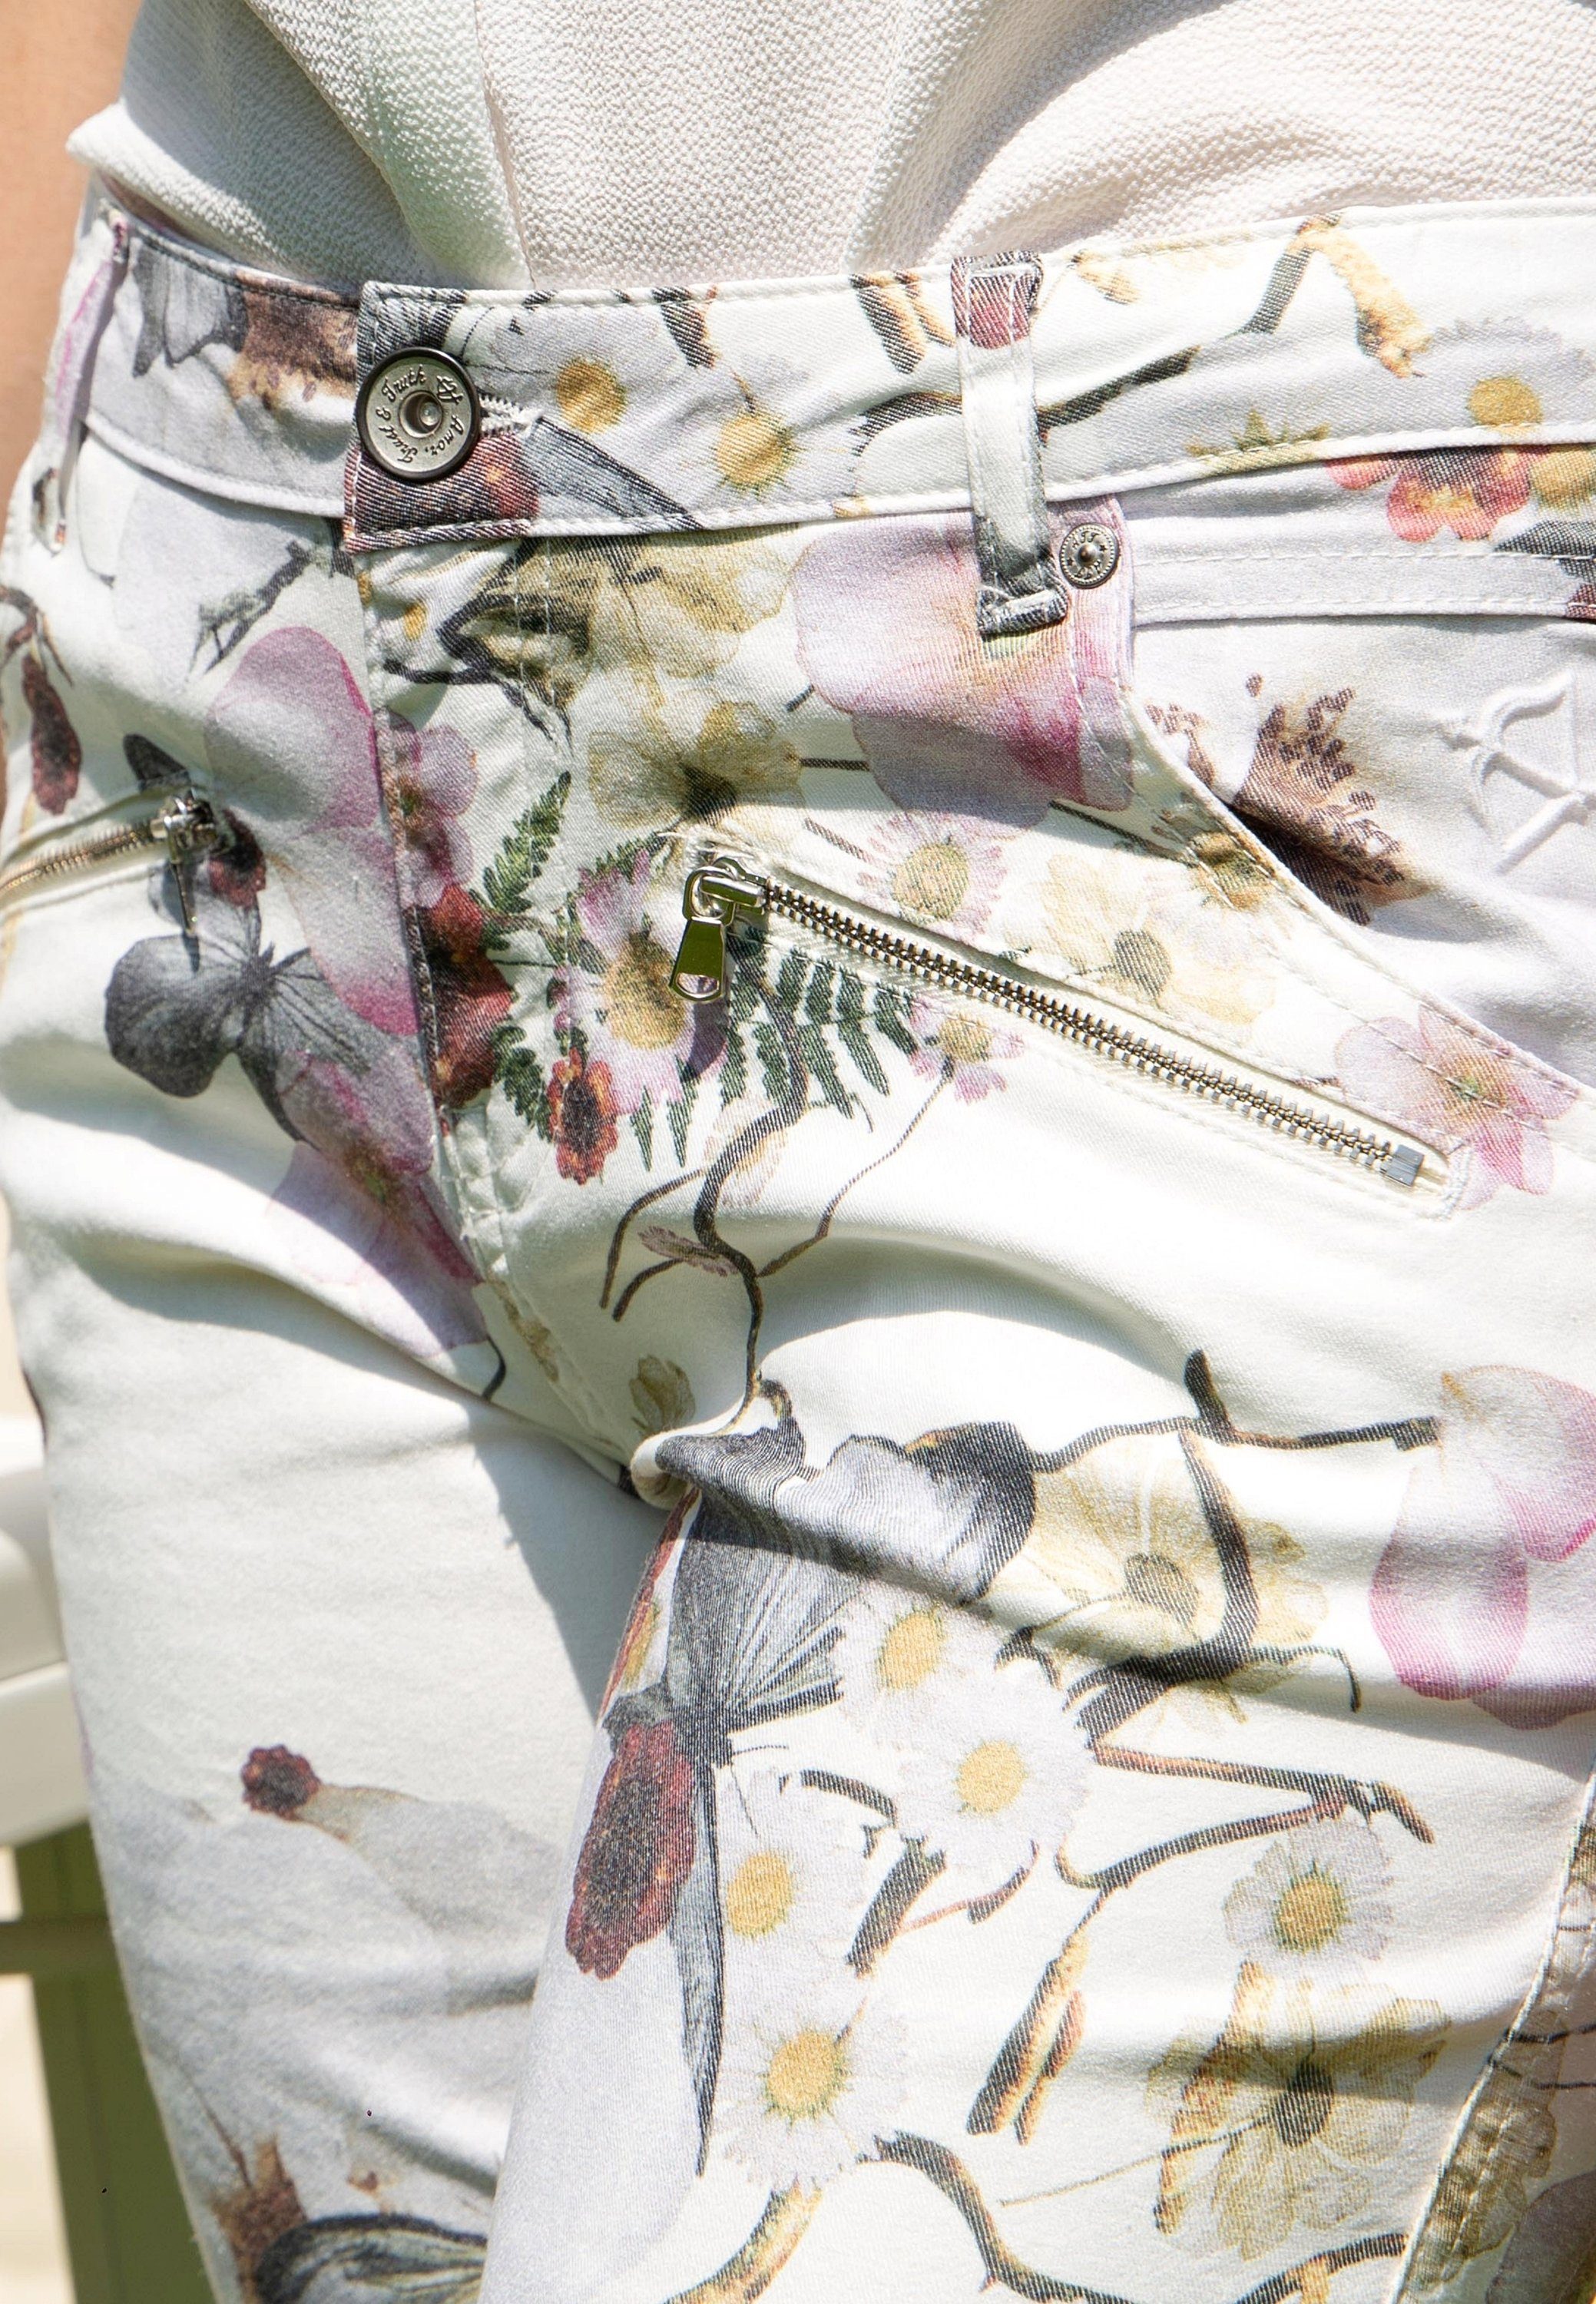 ATT Jeans All-Over-Print Lola Stoffhose mit floralem